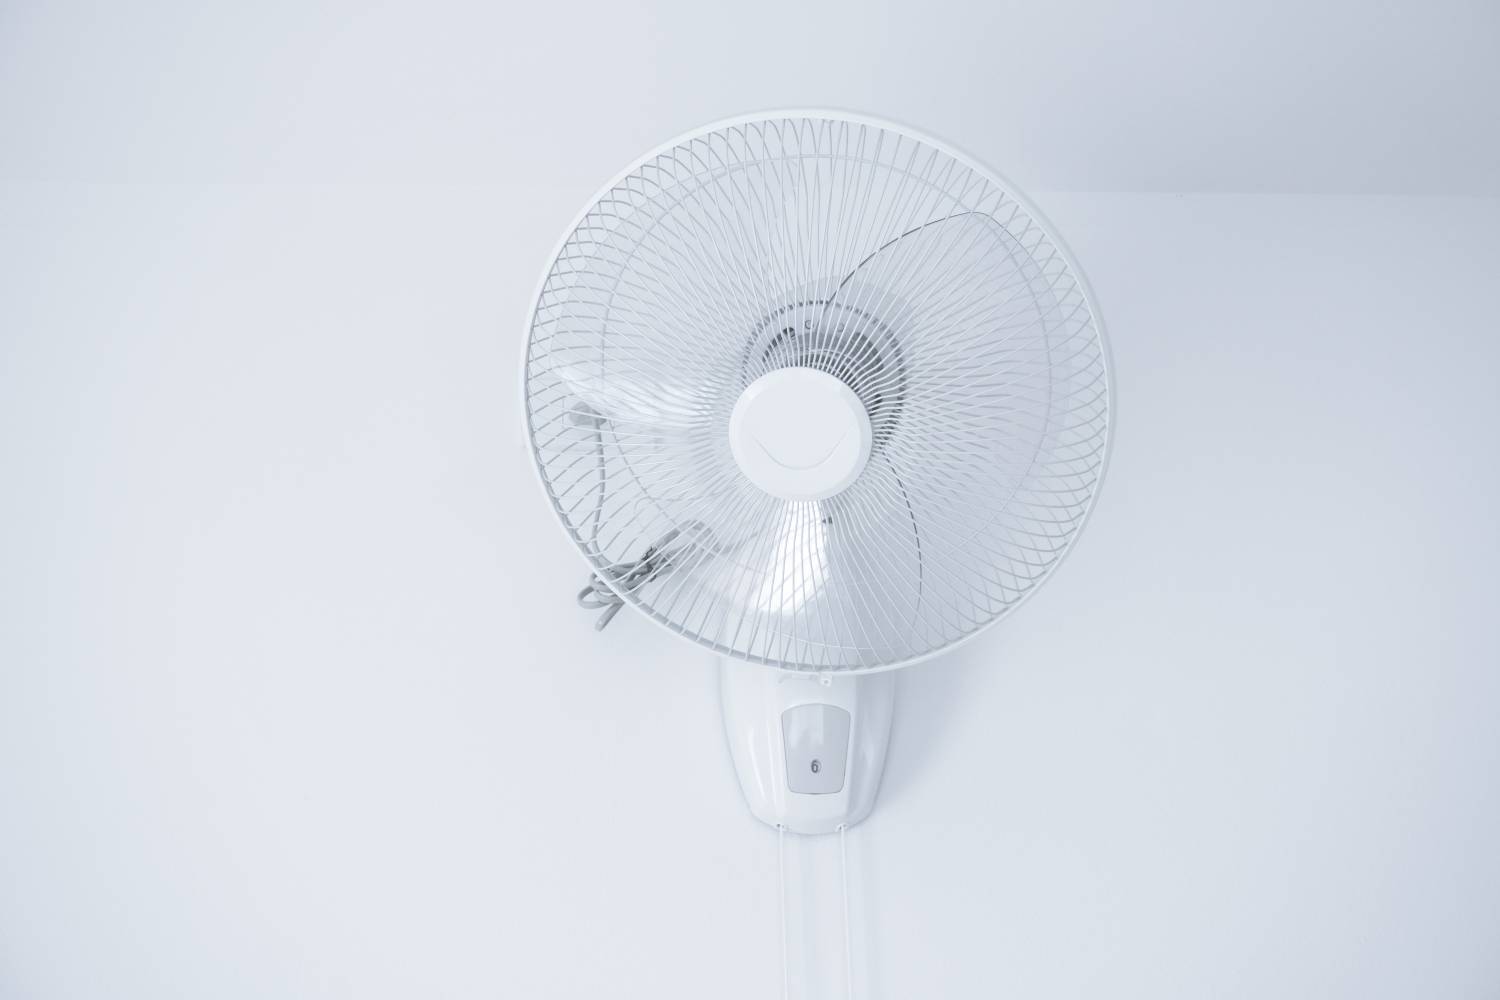 Image of wall mounted fan in room